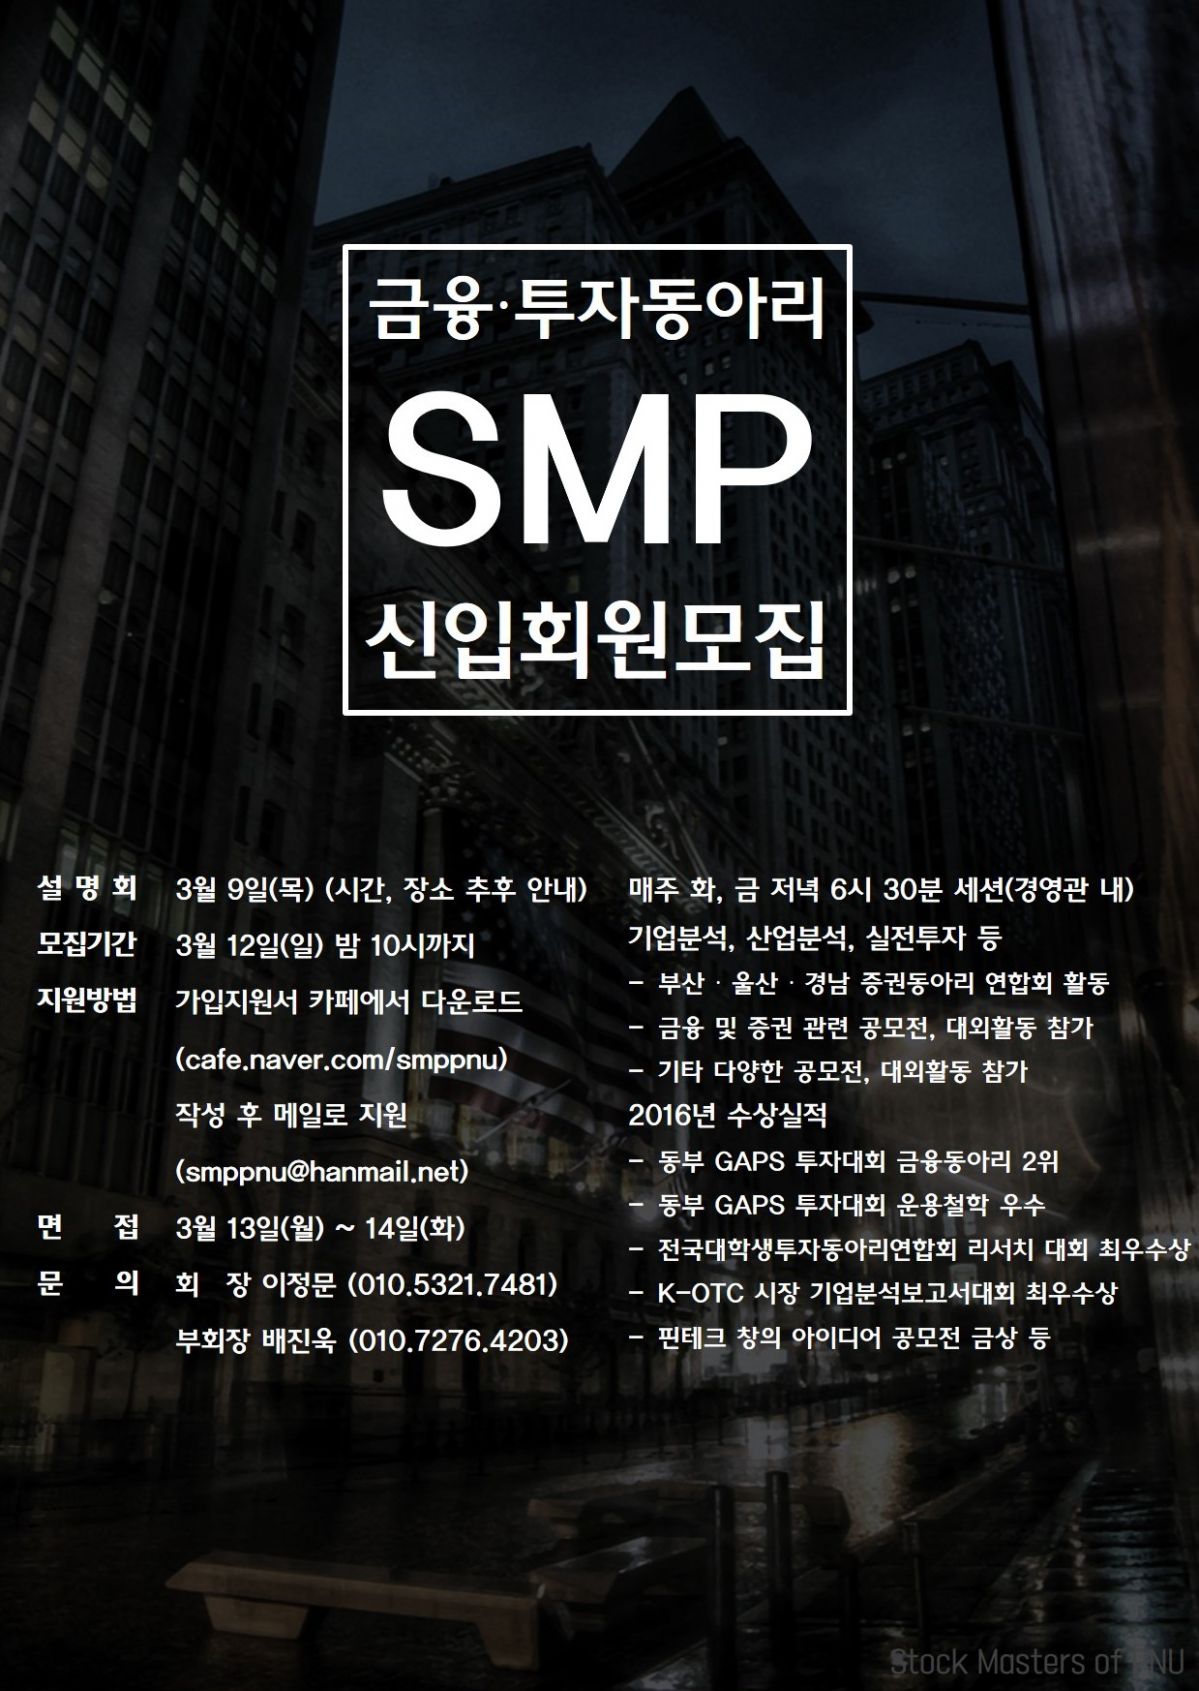 smp 포스터 201702260158.jpg : "내 청춘의 상한가!" 부산대학교 금융, 투자동아리 SMP에서 21기 신입회원을 모집합니다.